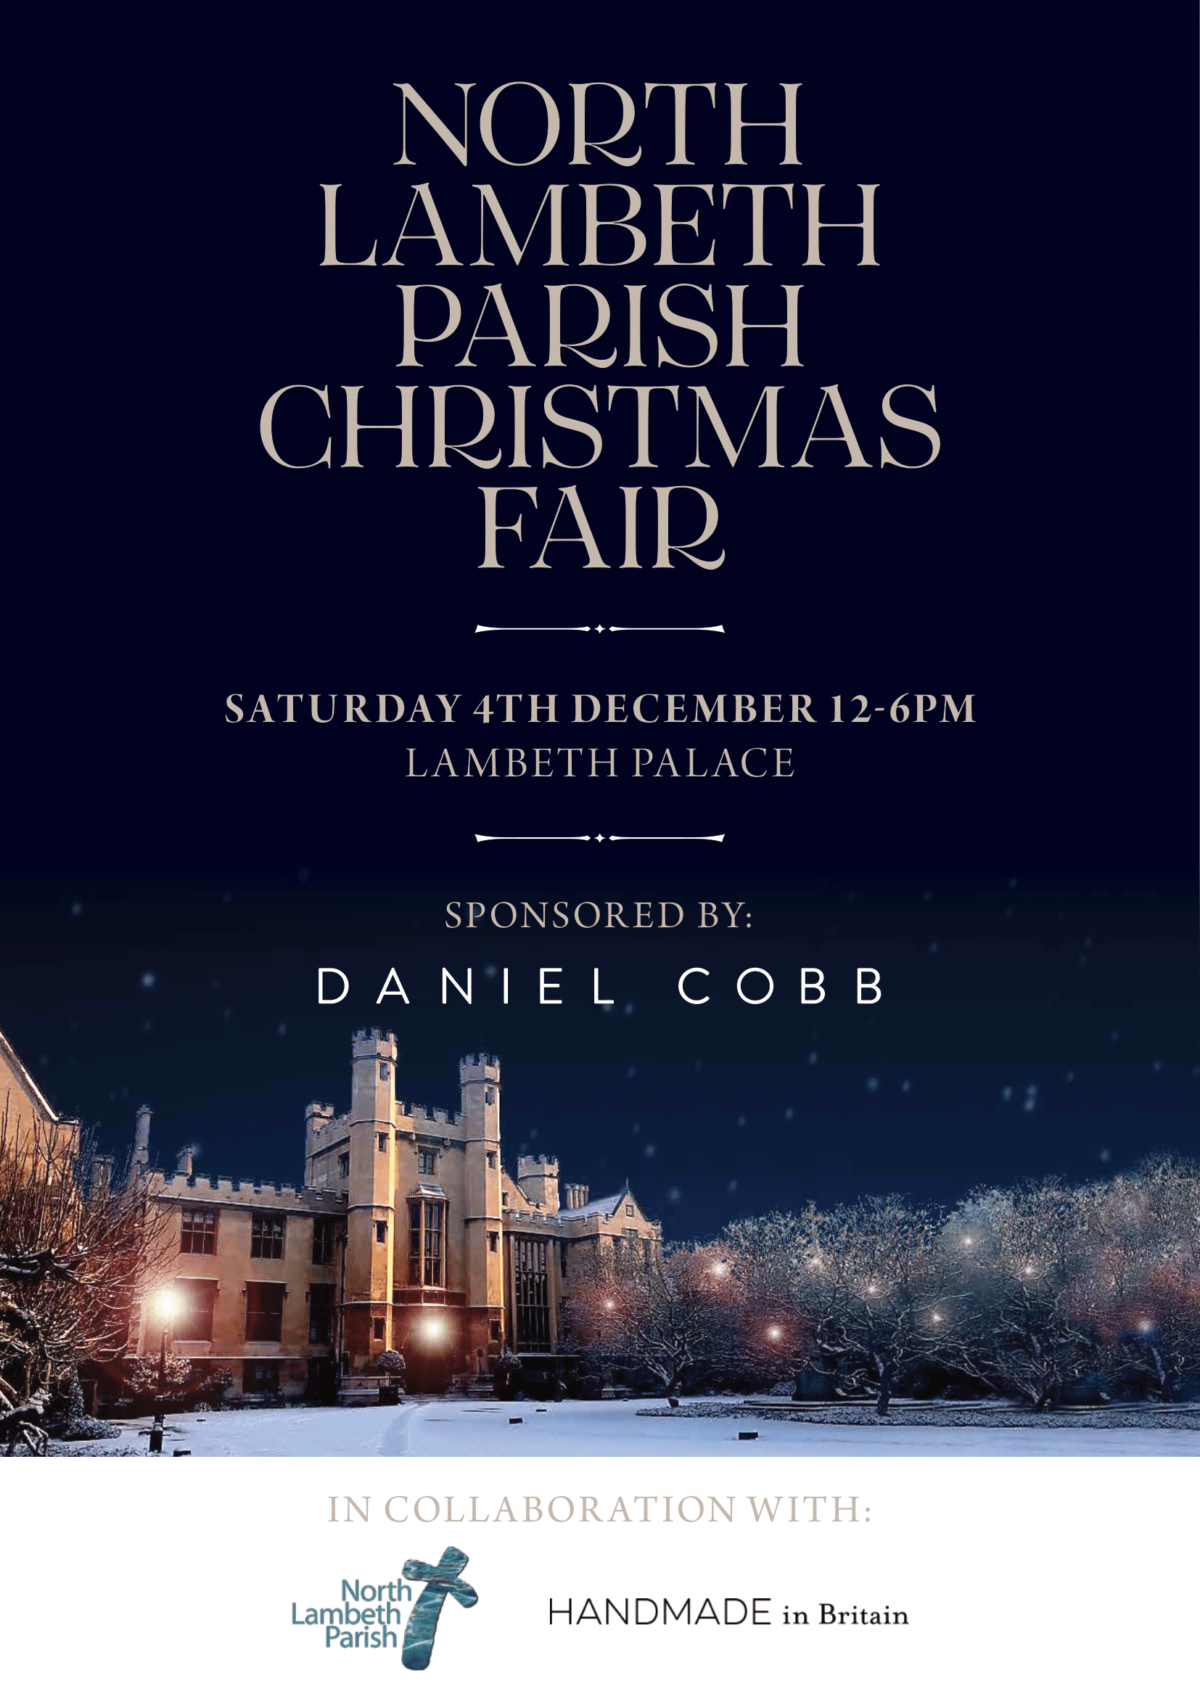 Invitation for Lambeth Parish Christmas fair